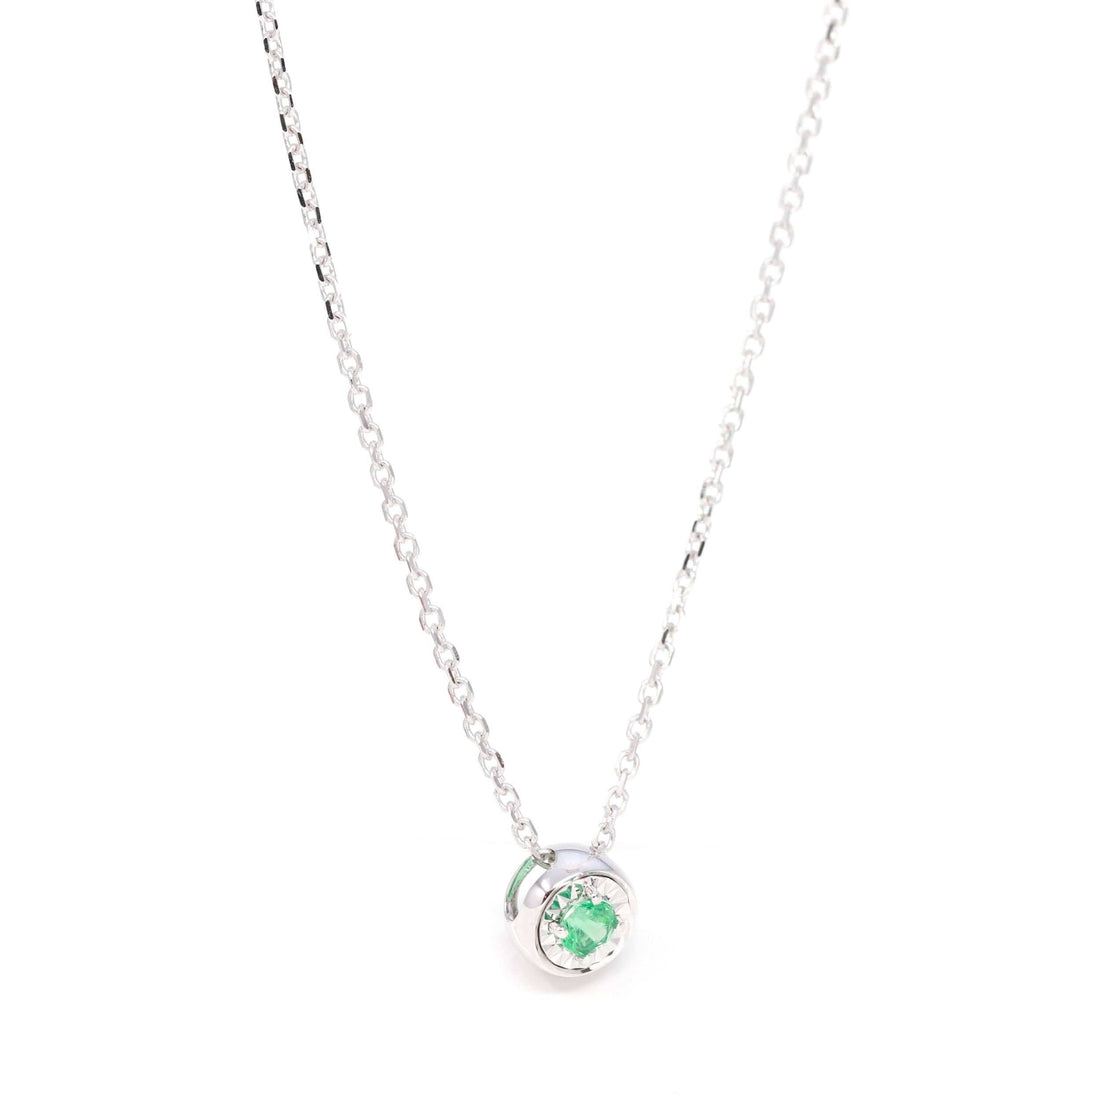 Baikalla Jewelry Gemstone Pendant Necklace Baikalla™ 14k White Gold Sapphire Round 4 Prong Set Necklace With Diamond-Cut Halo